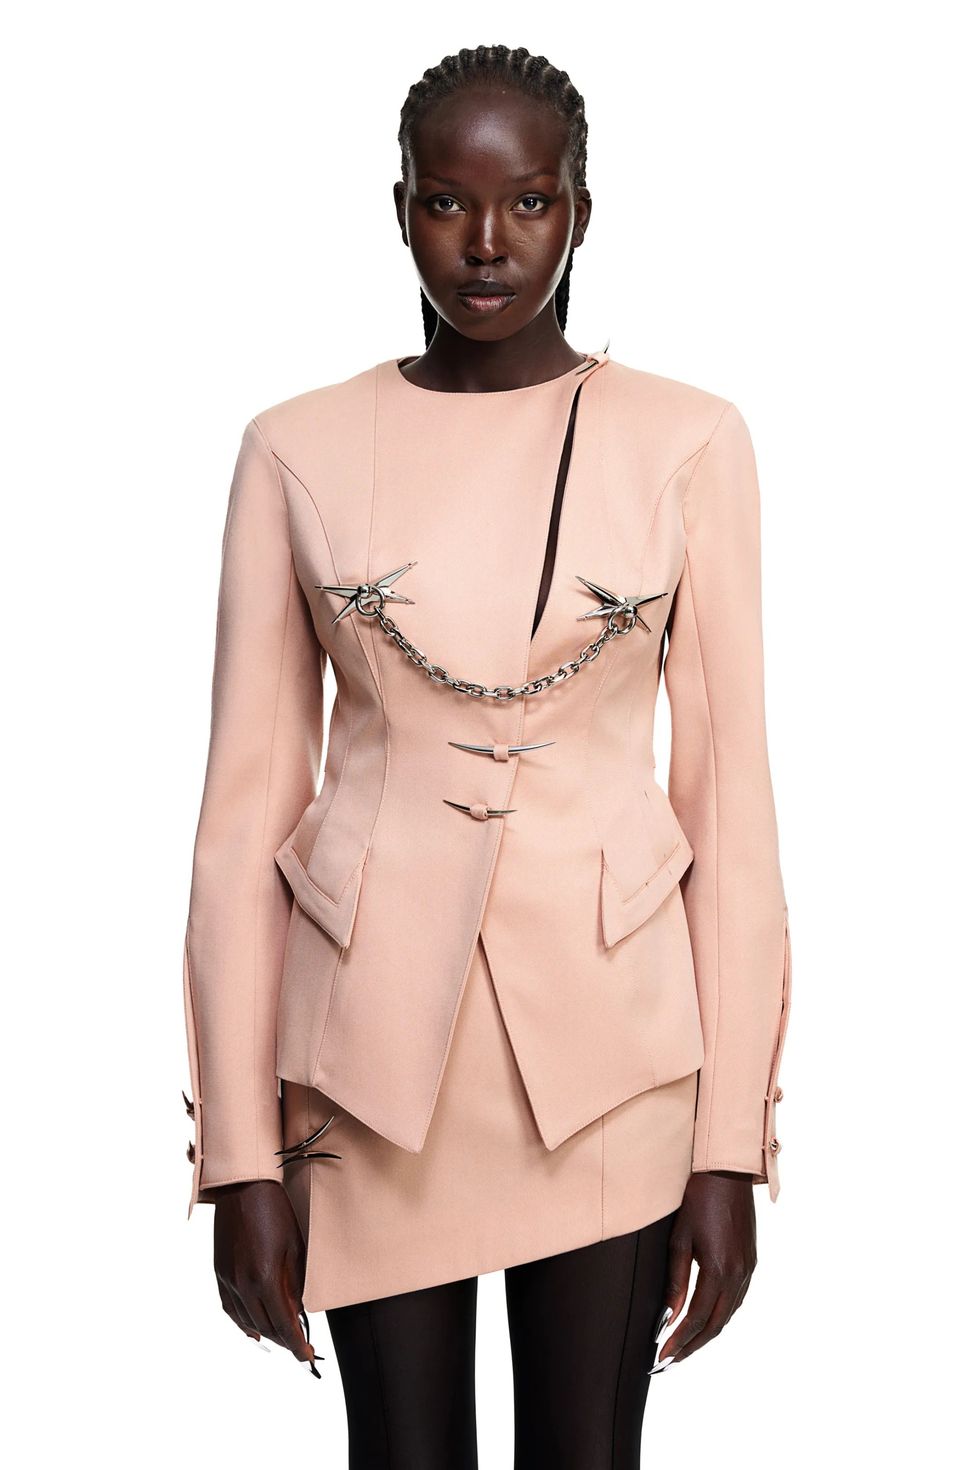 Chloe Sevigny Wore A Dress From H&M x Simone Rocha Line